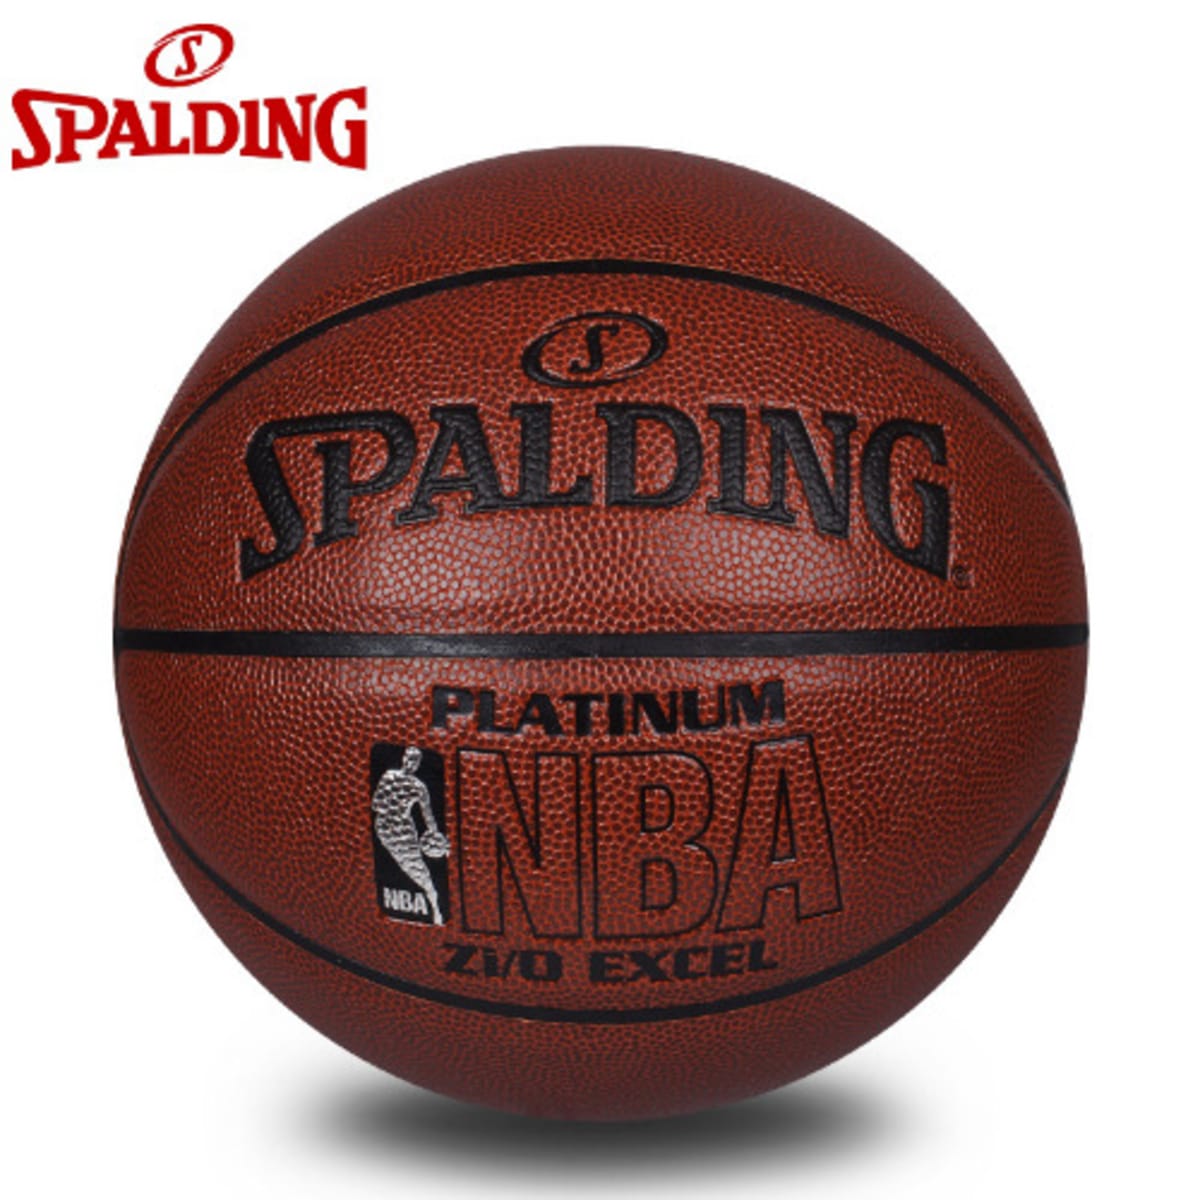 Nba Online Professional Basketball | Konga Spalding Shopping